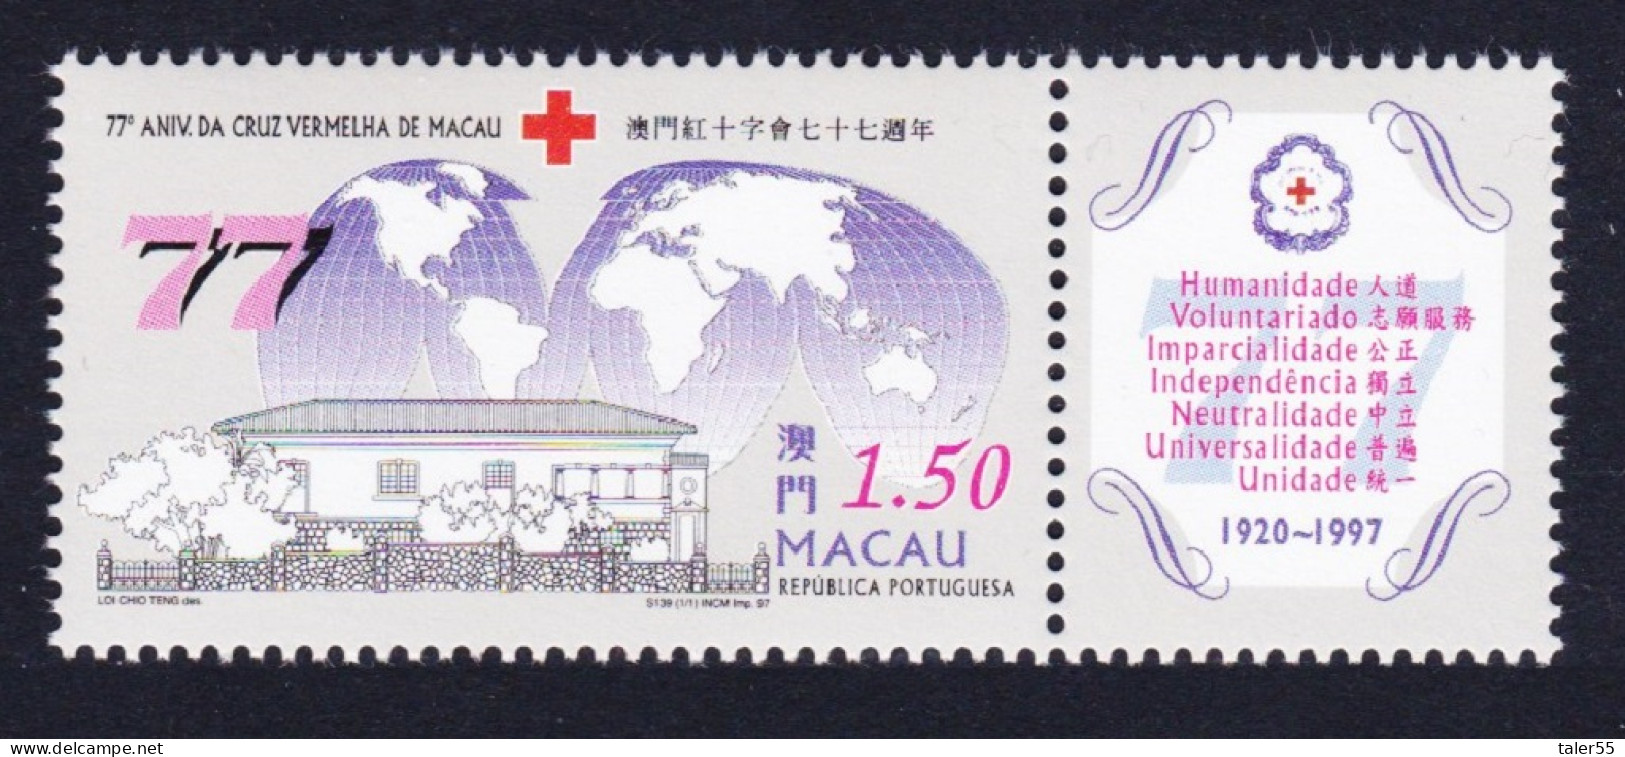 Macao Macau Red Cross 1v+label 1997 MNH SG#999 MI#924 Sc#885 - Unused Stamps